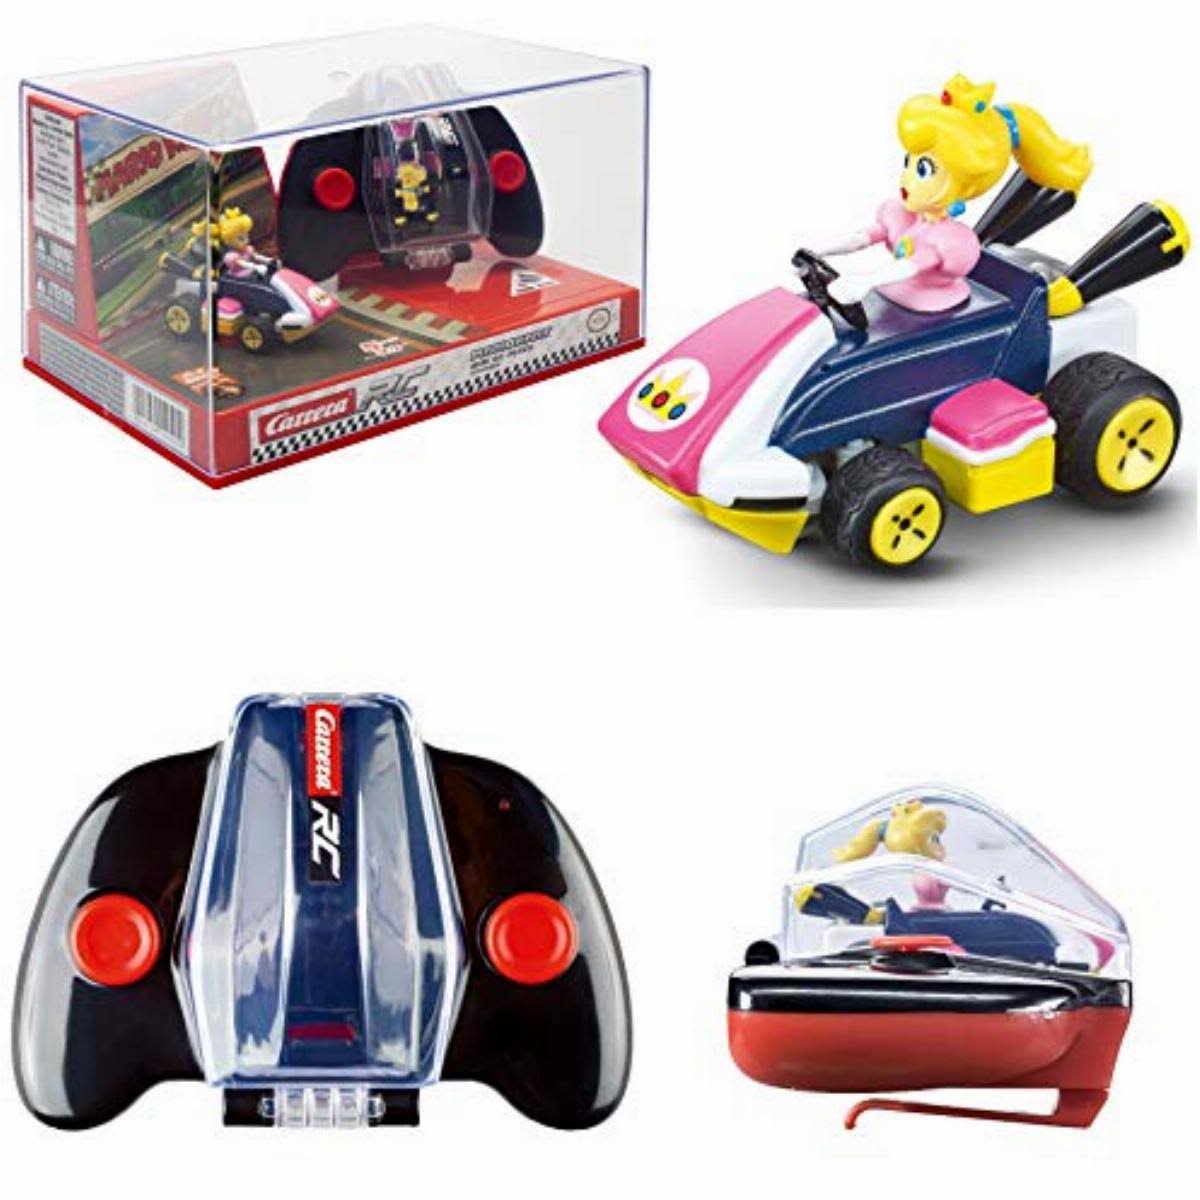 Carrera RC Nintendo Mario Kart 2.4 GHz Mini Collectible Radio Remote Control Toy Car Vehicle - Peach